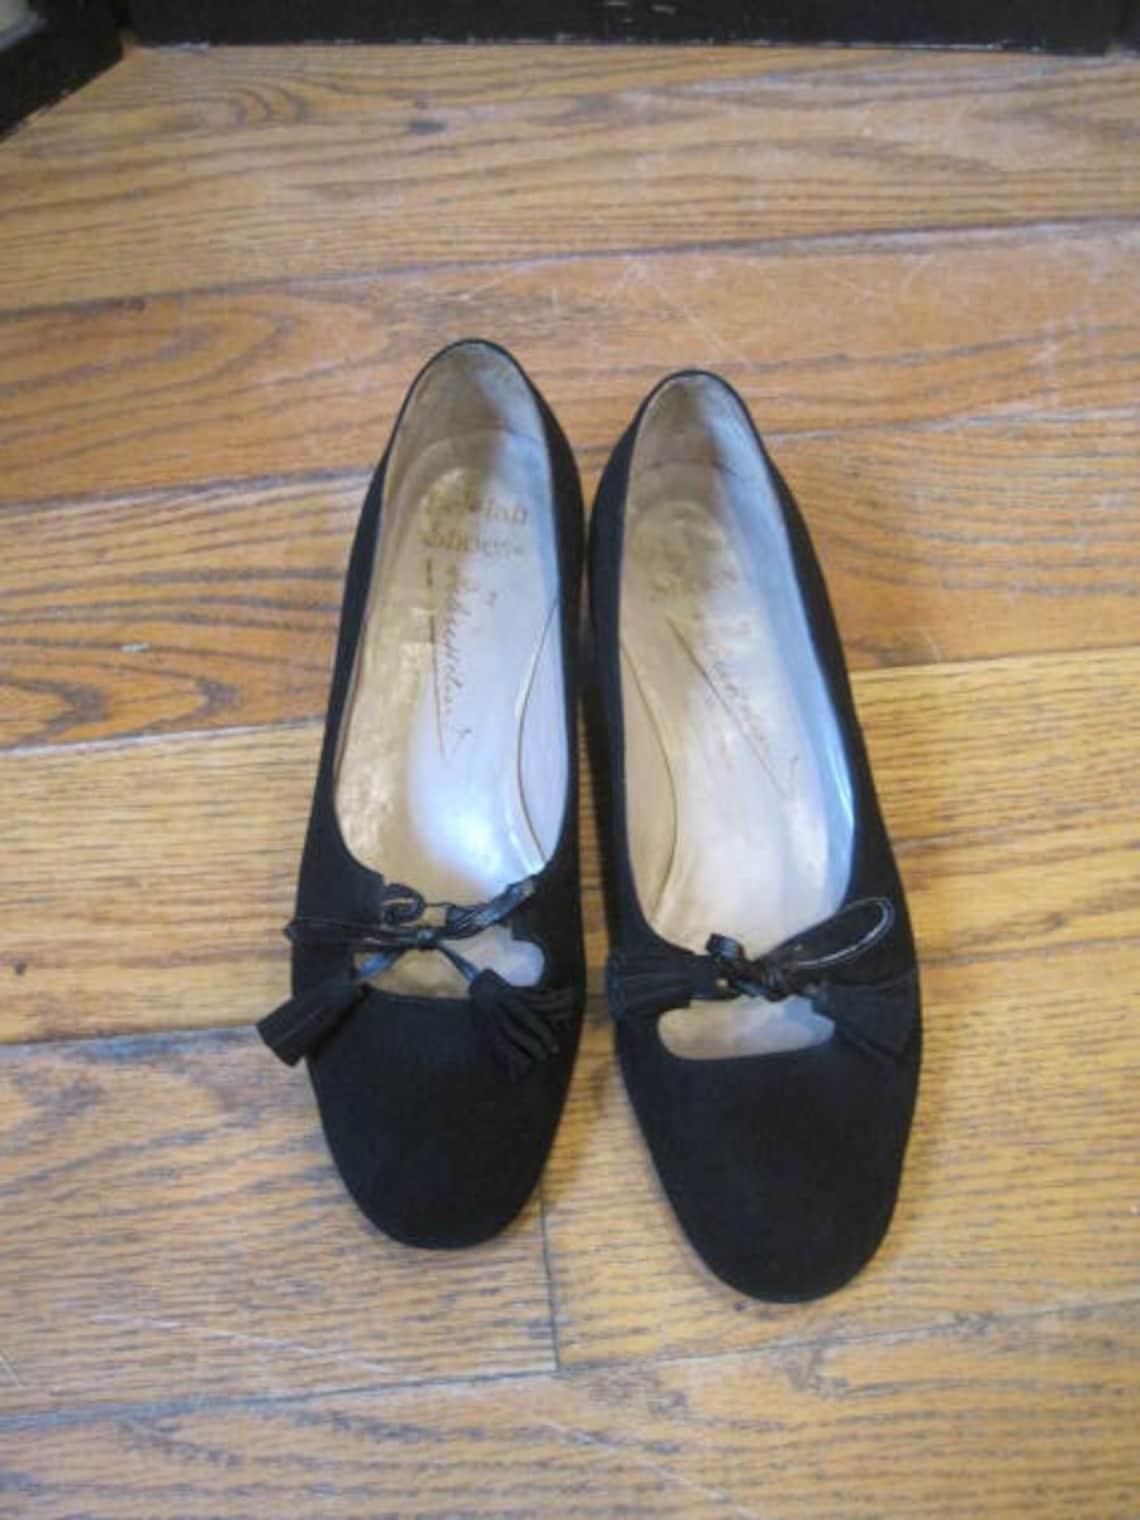 Vintage Belgian Shoes Black Suede Pumps With Tassel Tie 6.5 6 - Etsy